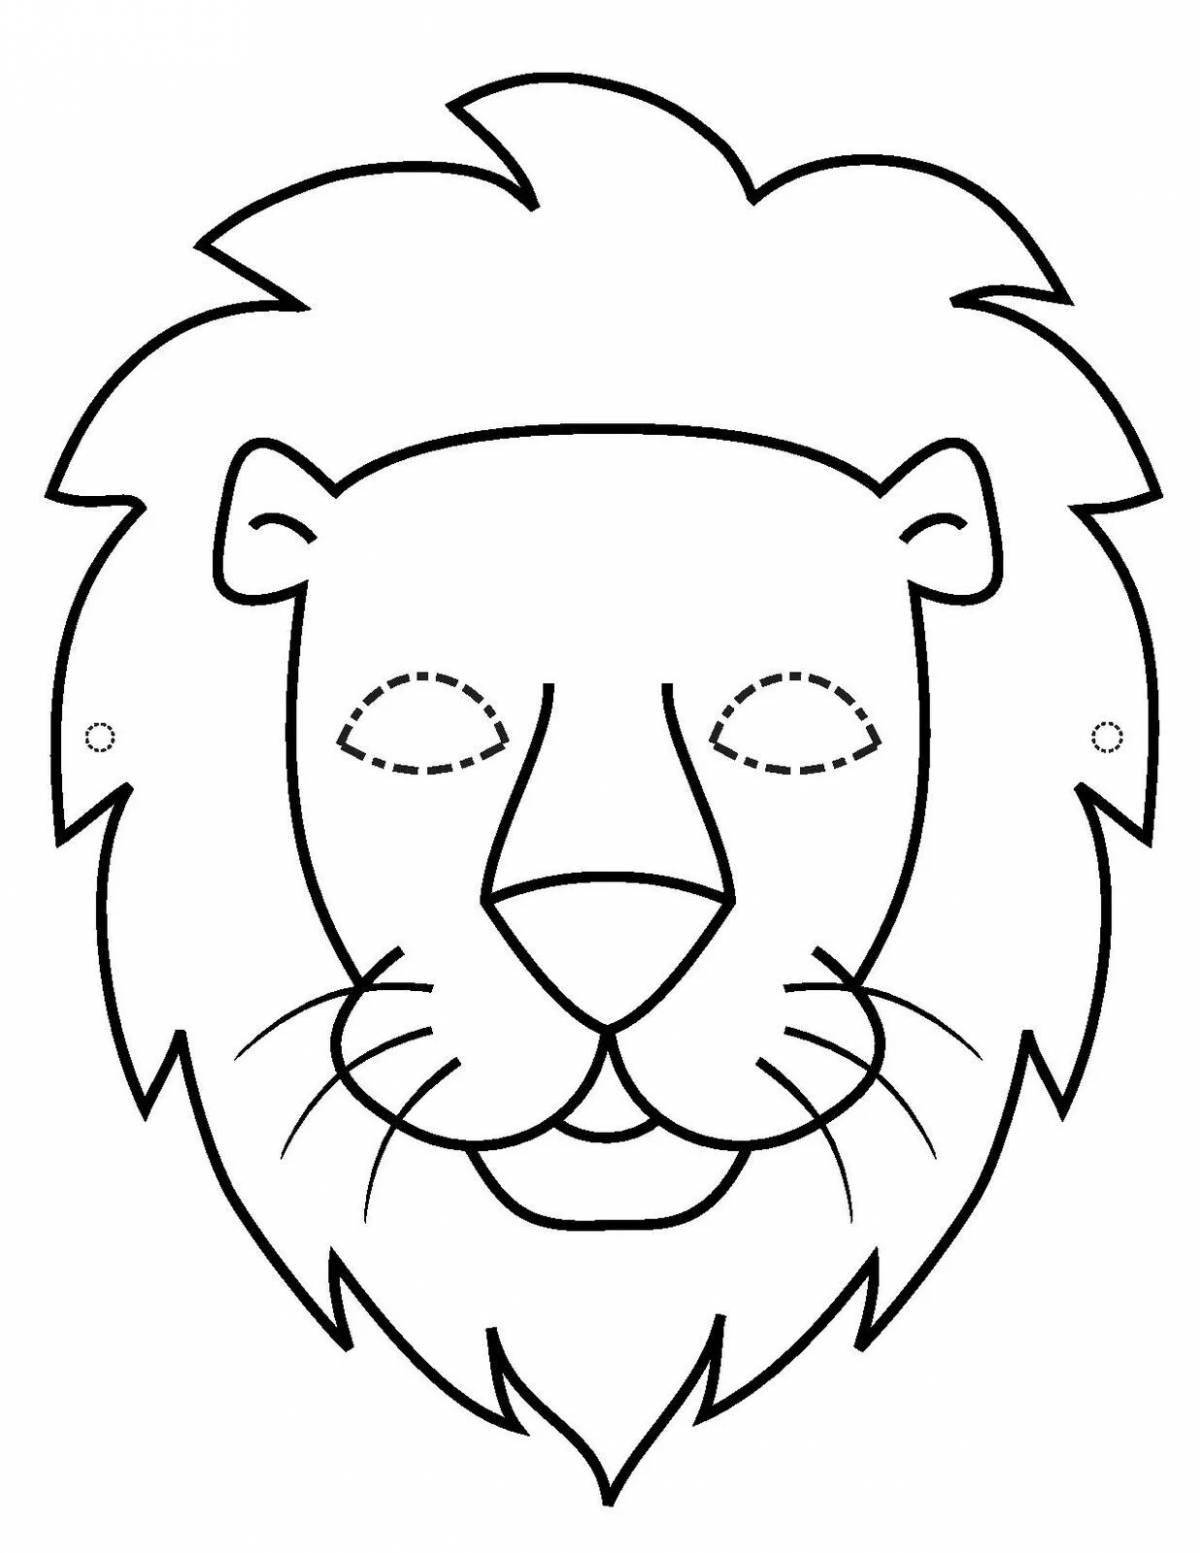 Страница раскраски царственной головы льва